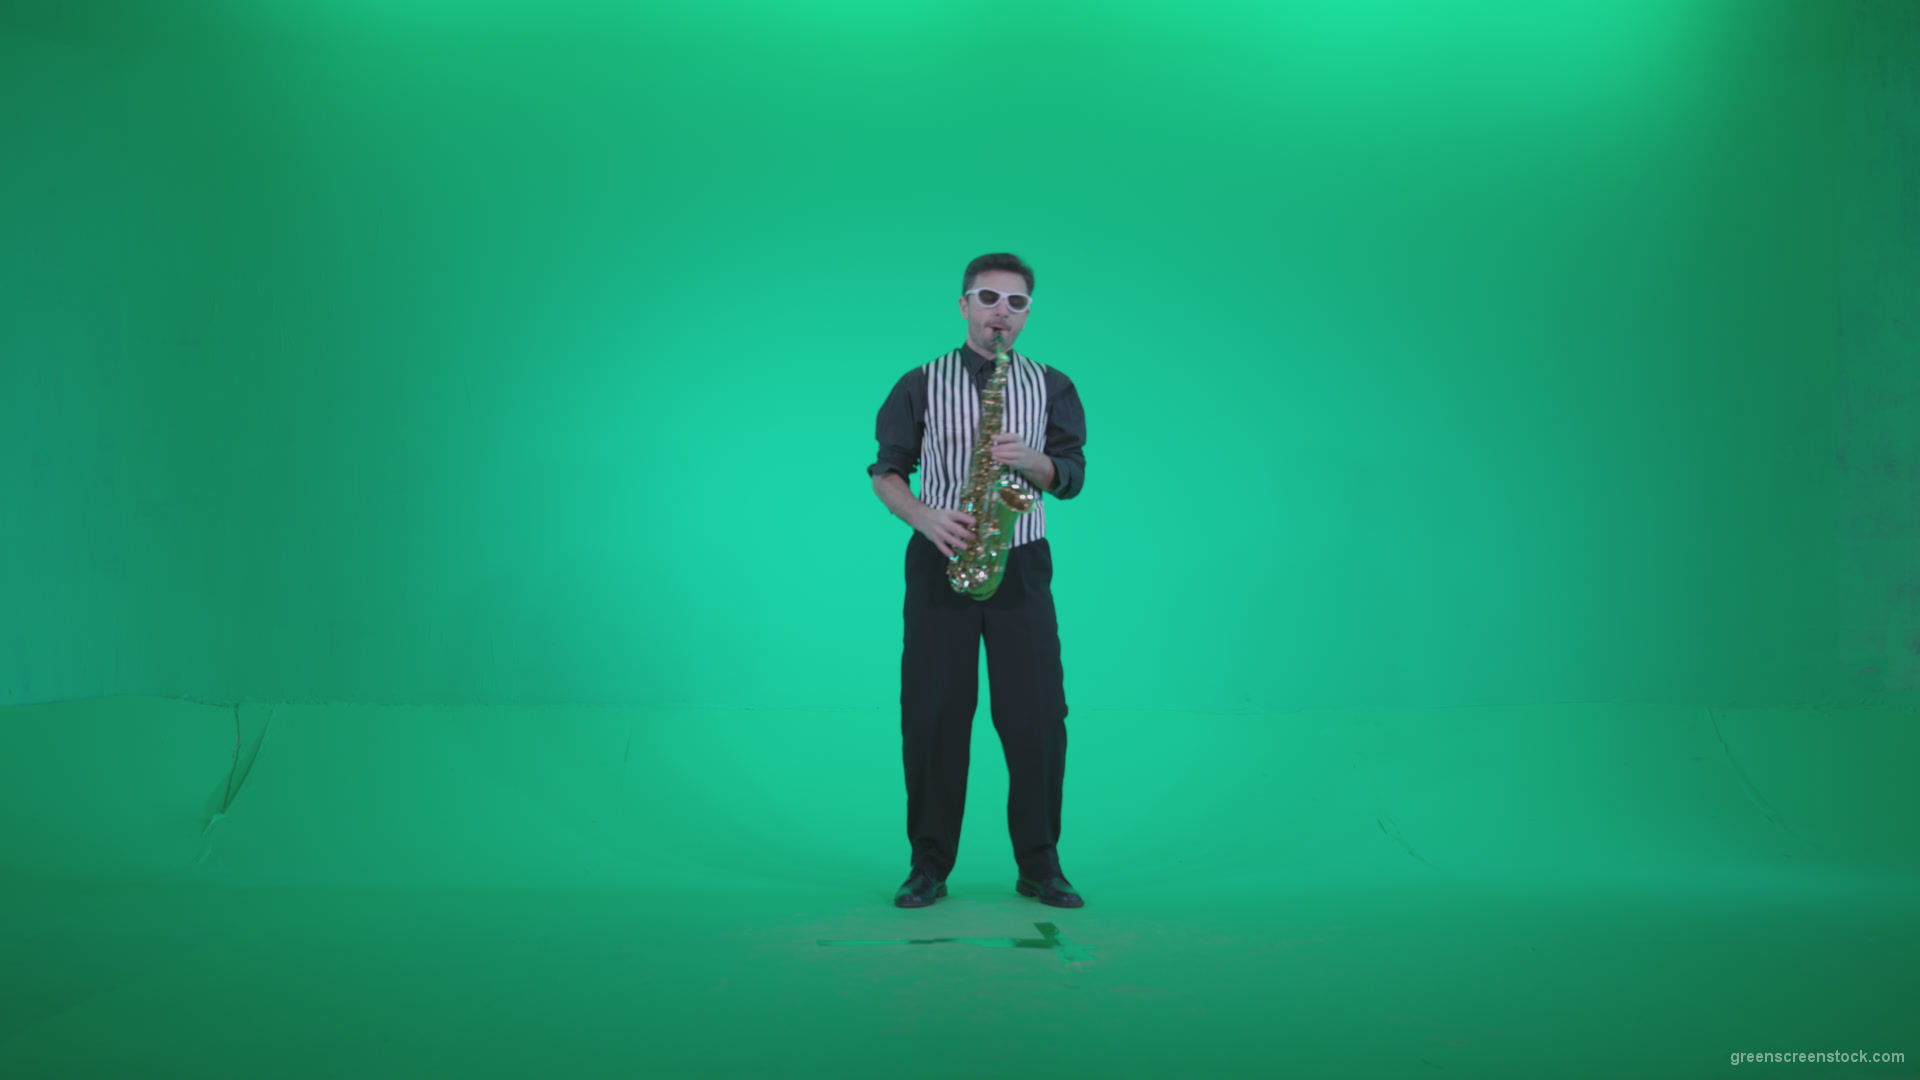 Saxophone-Virtuoso-Performer-s4_001 Green Screen Stock